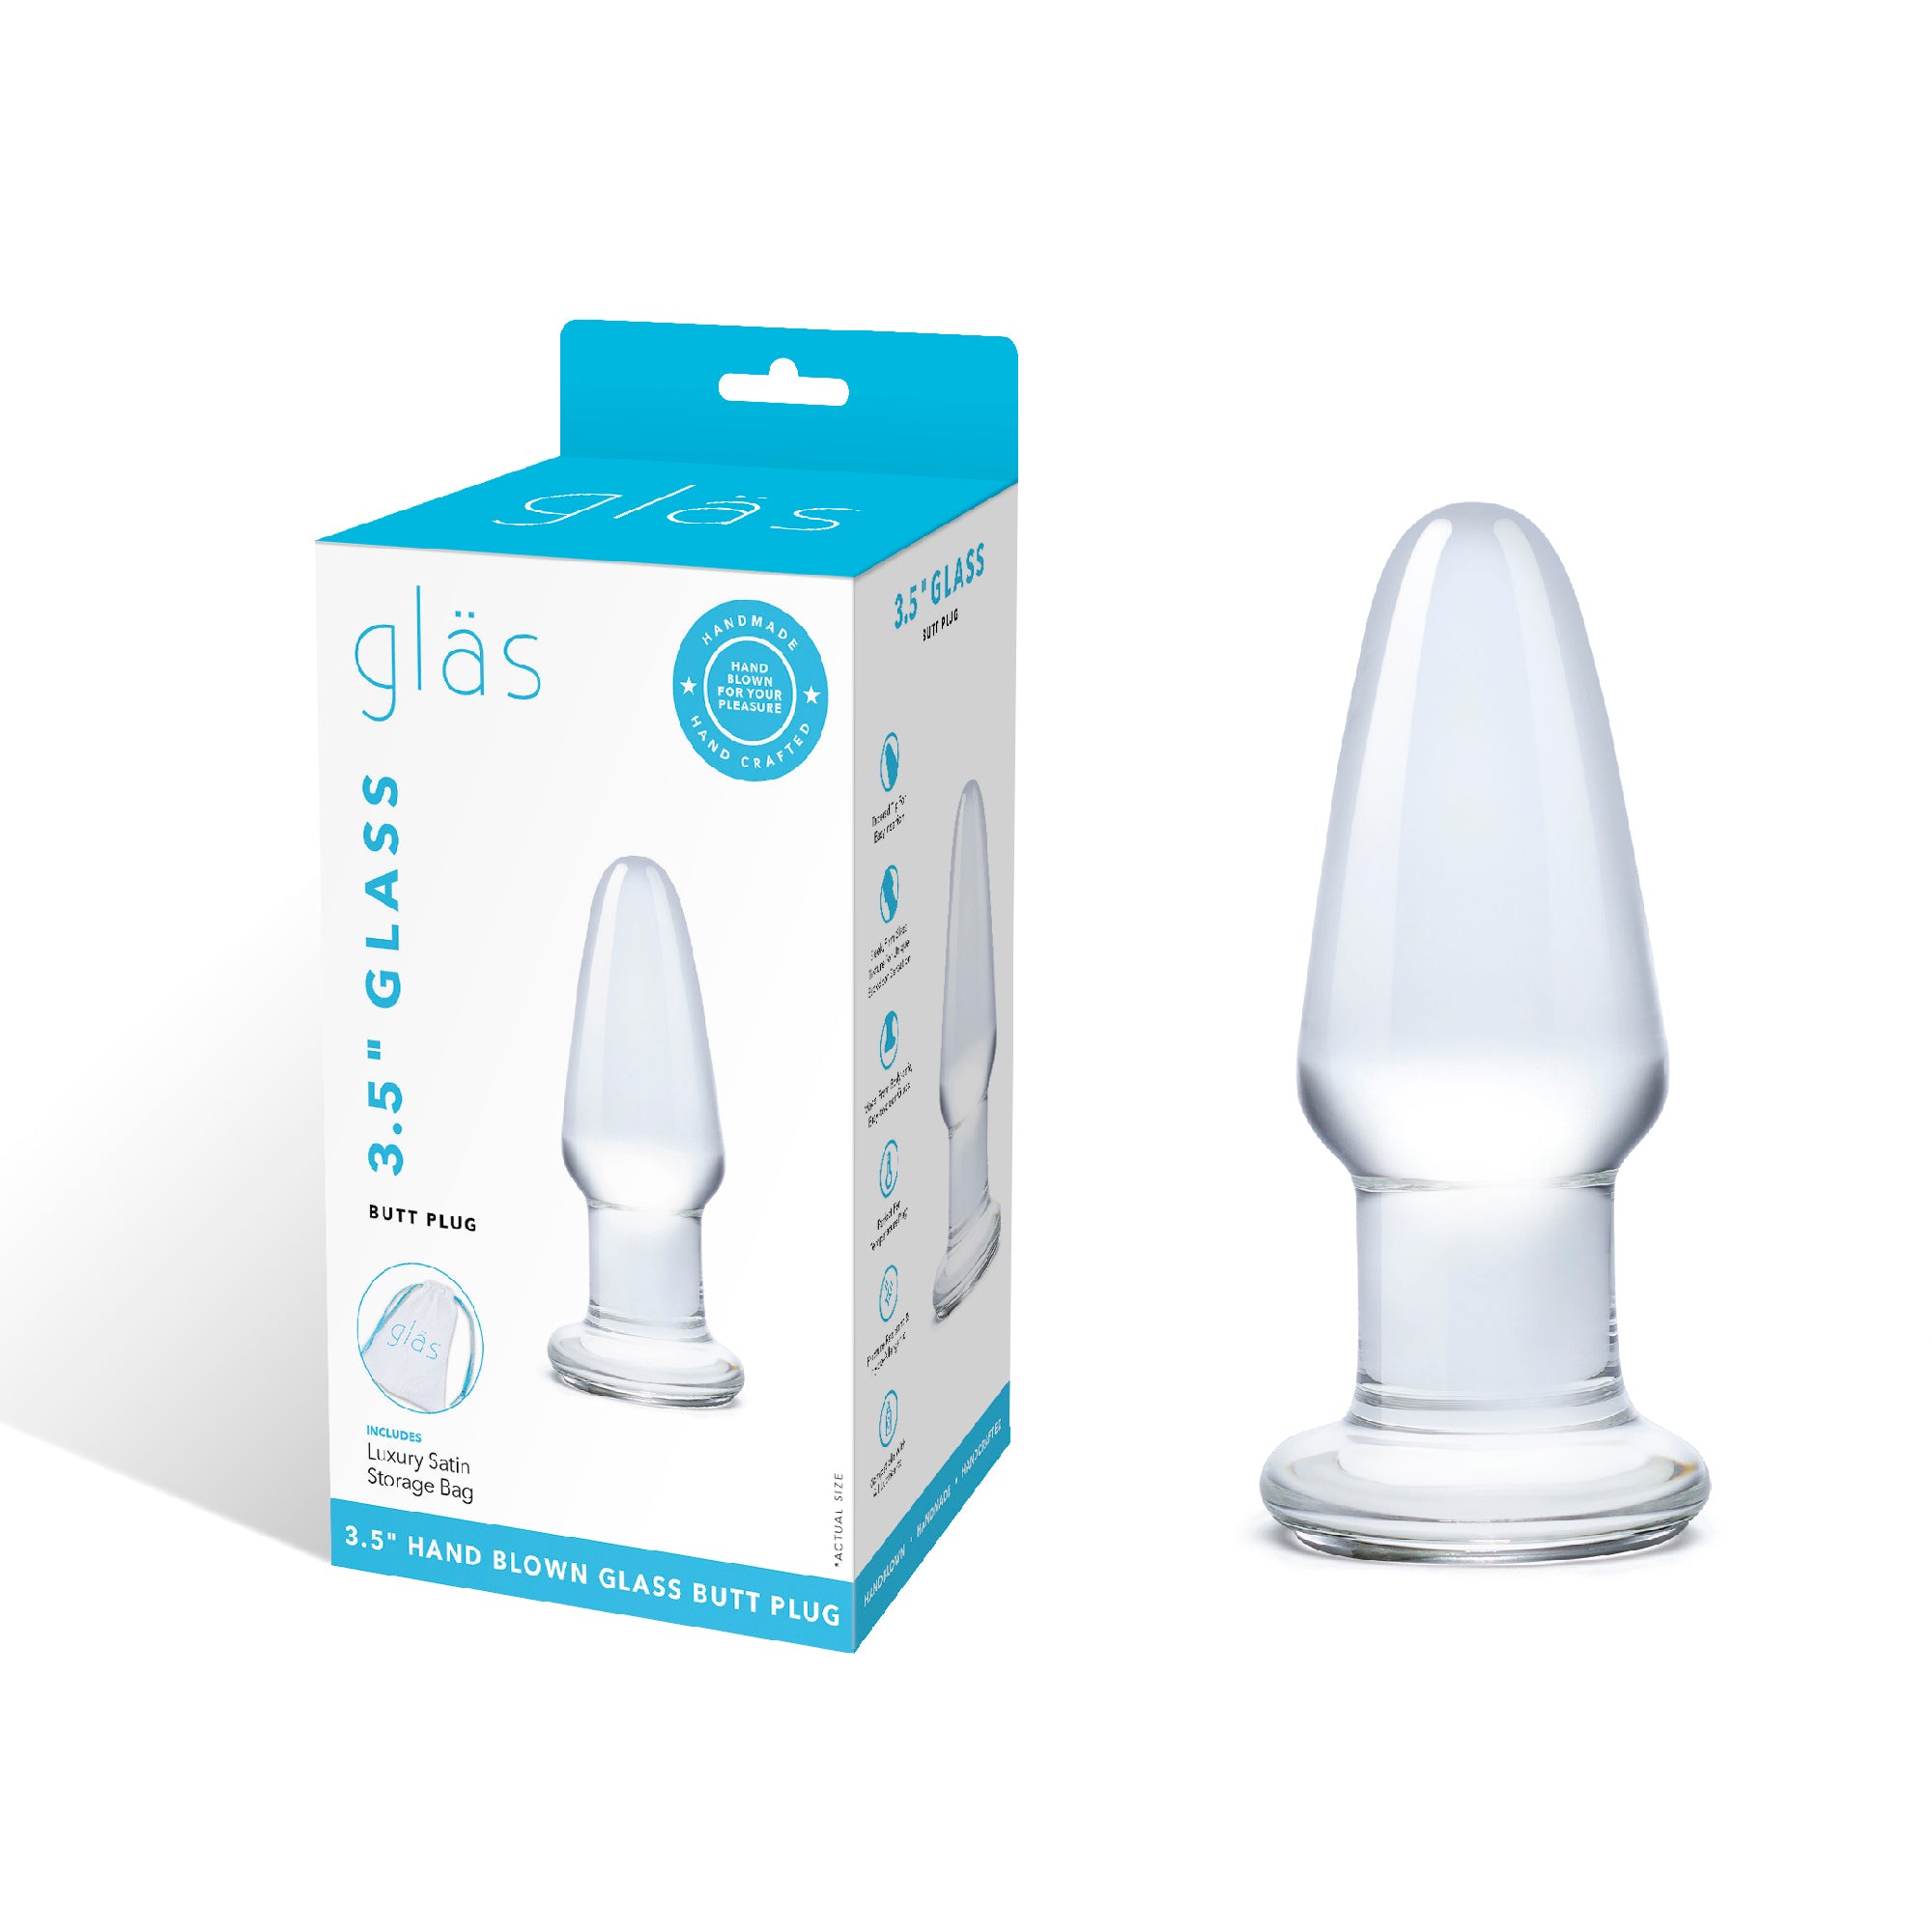 Packaging of the Gläs 3.5 inch Glass Butt Plug